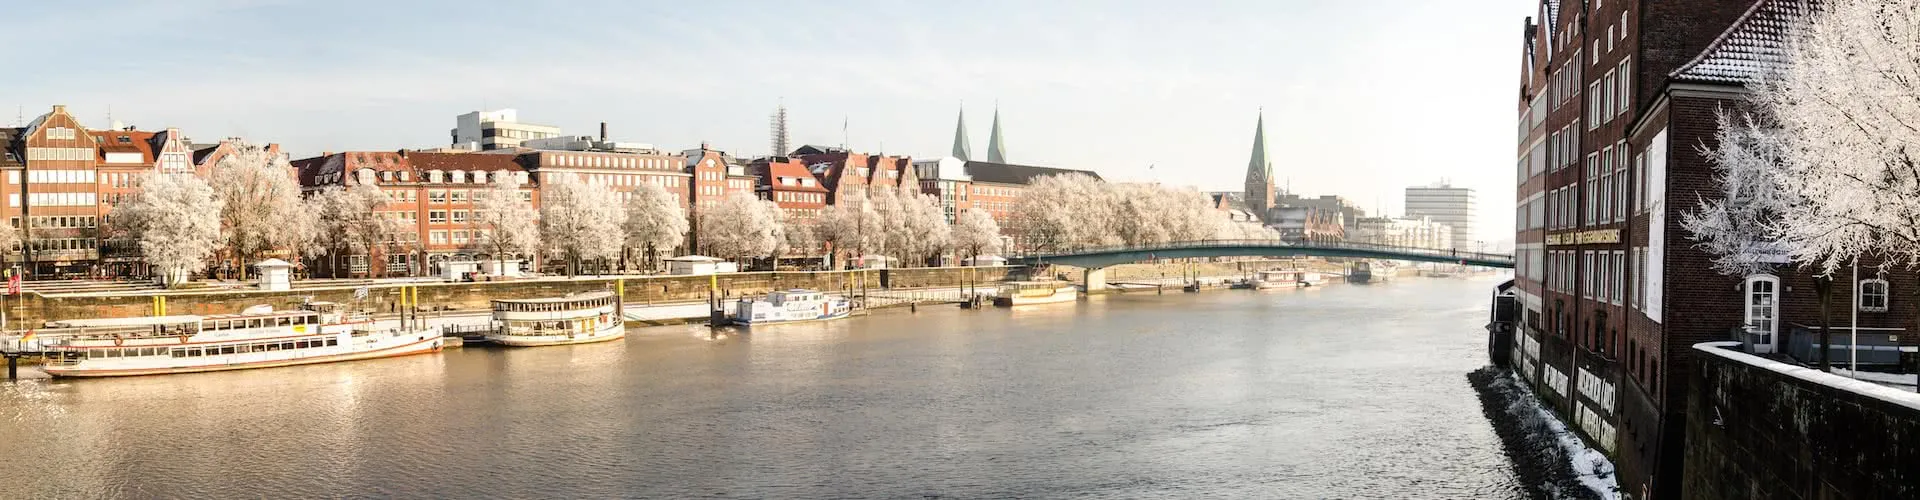 Bremen panorama image